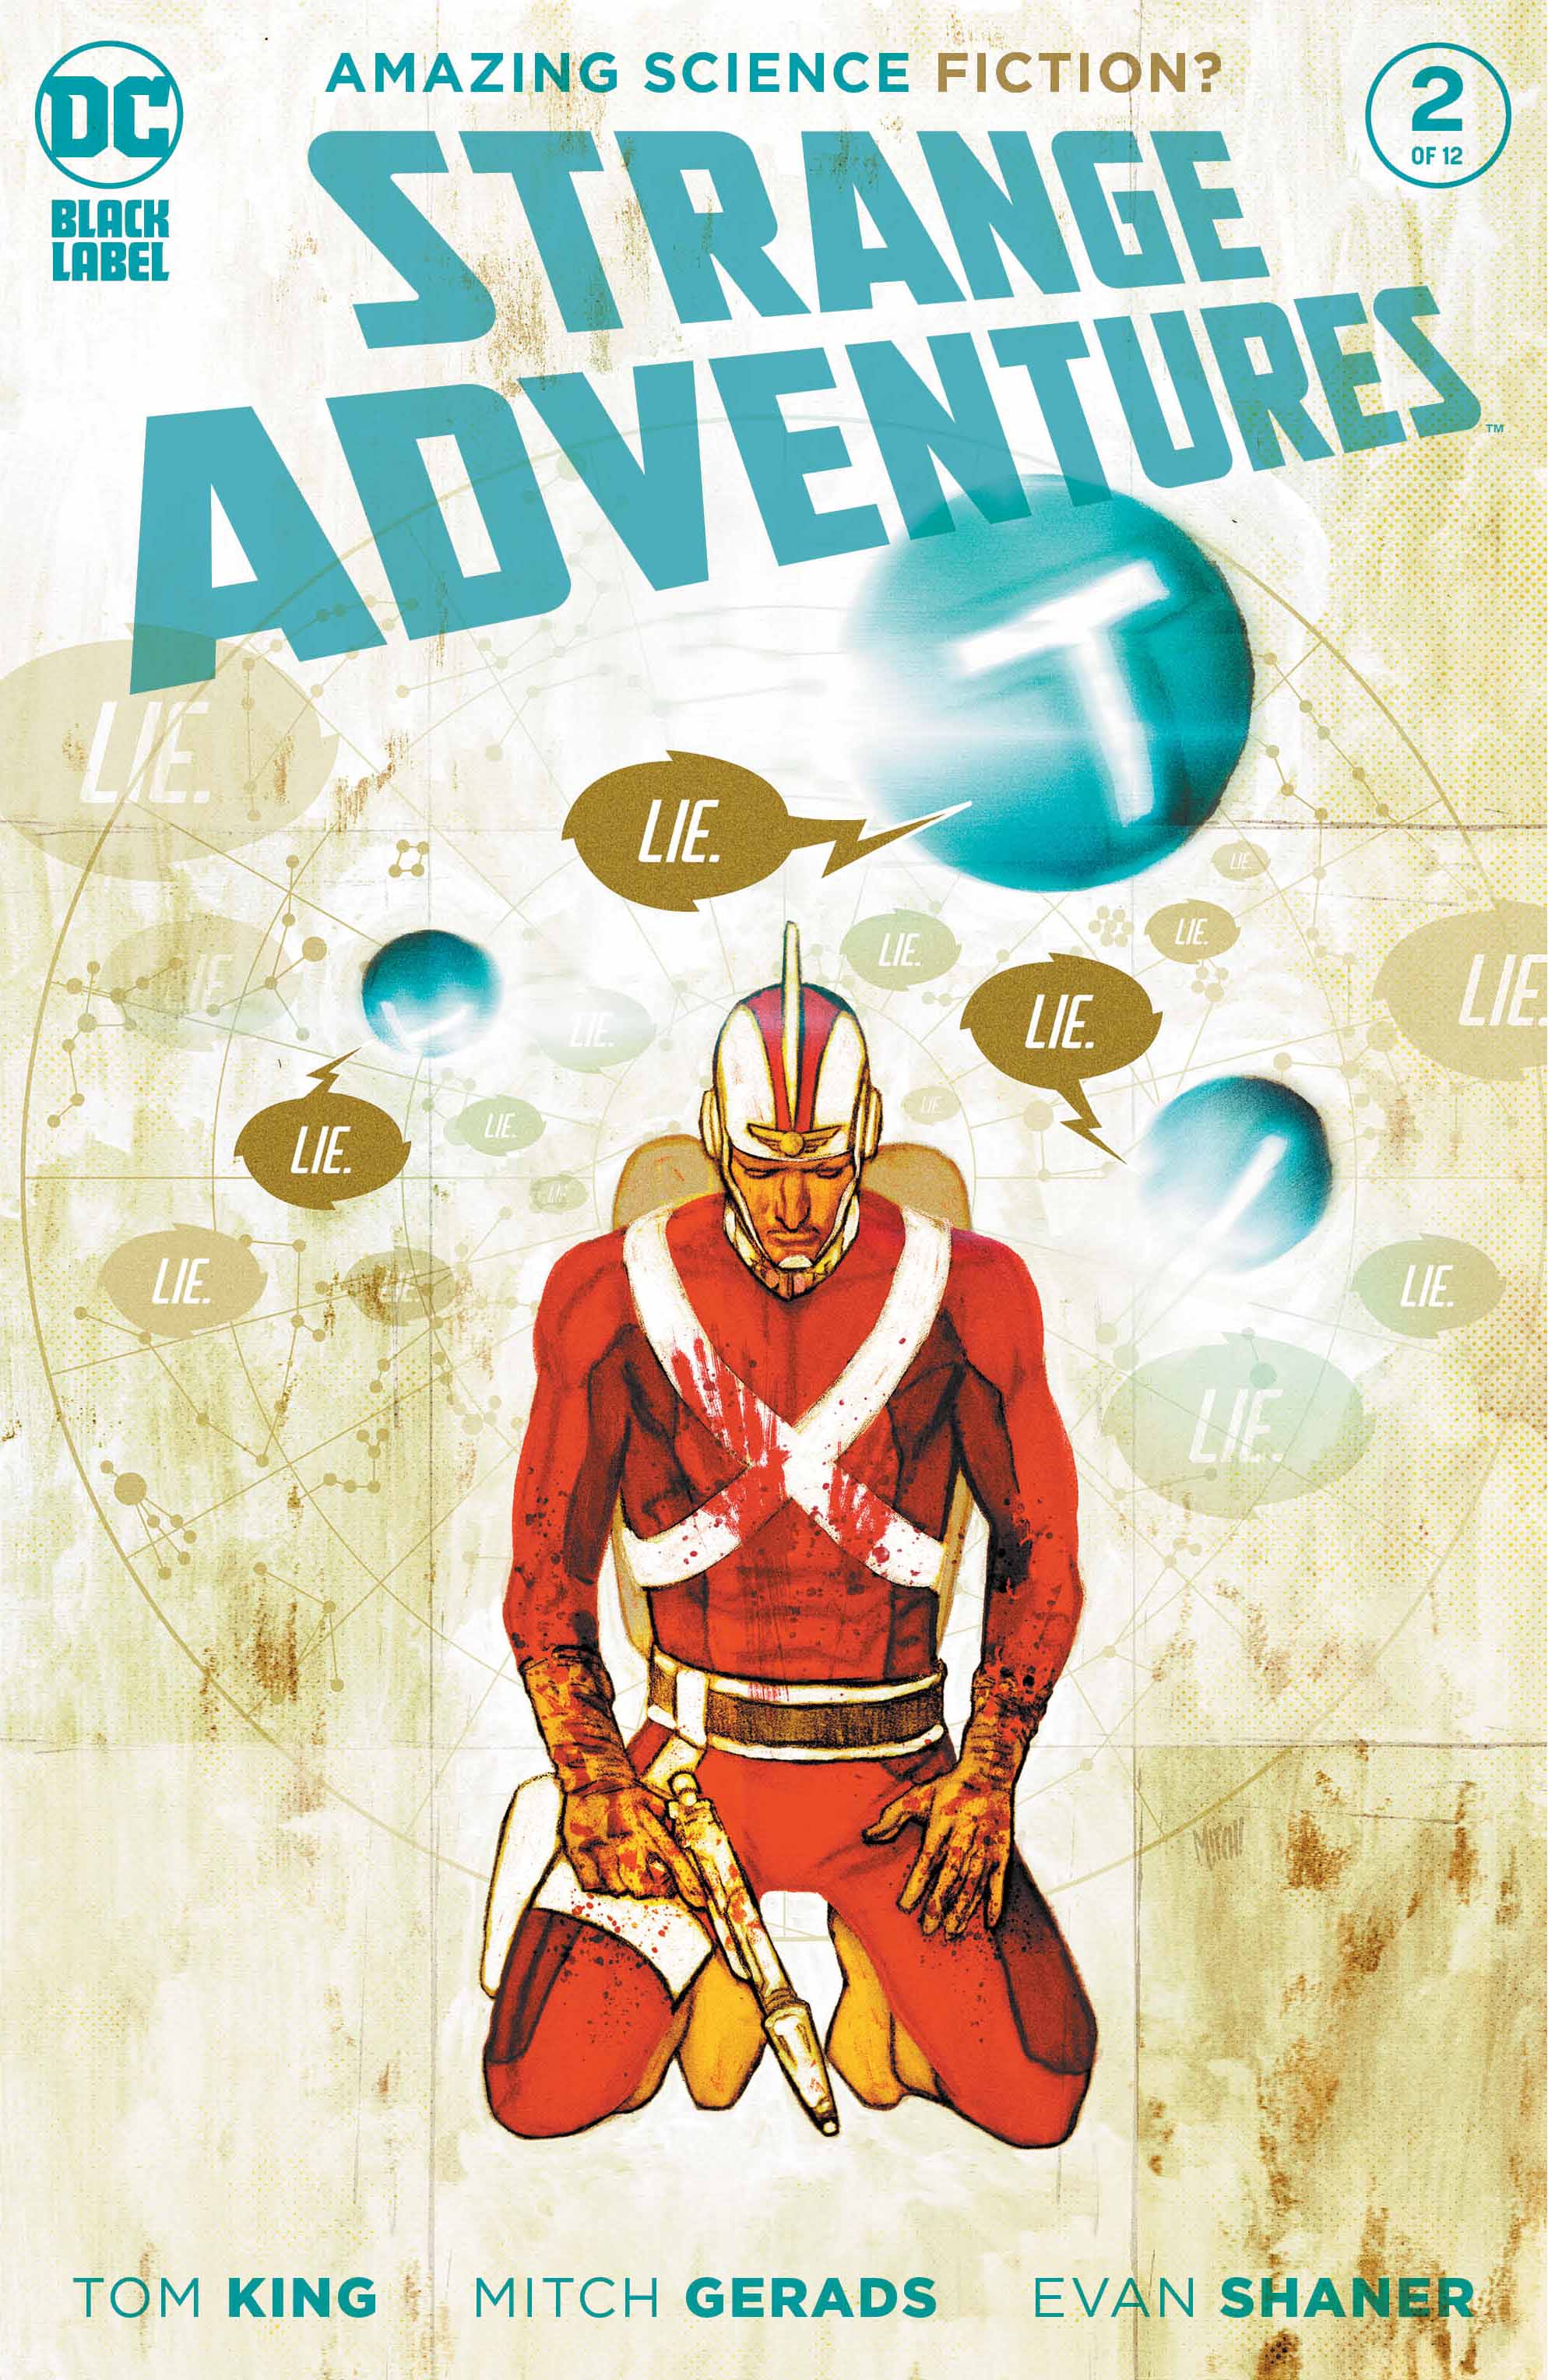 DC Reinvents Mister Terrific With Strange Adventures | Den of Geek